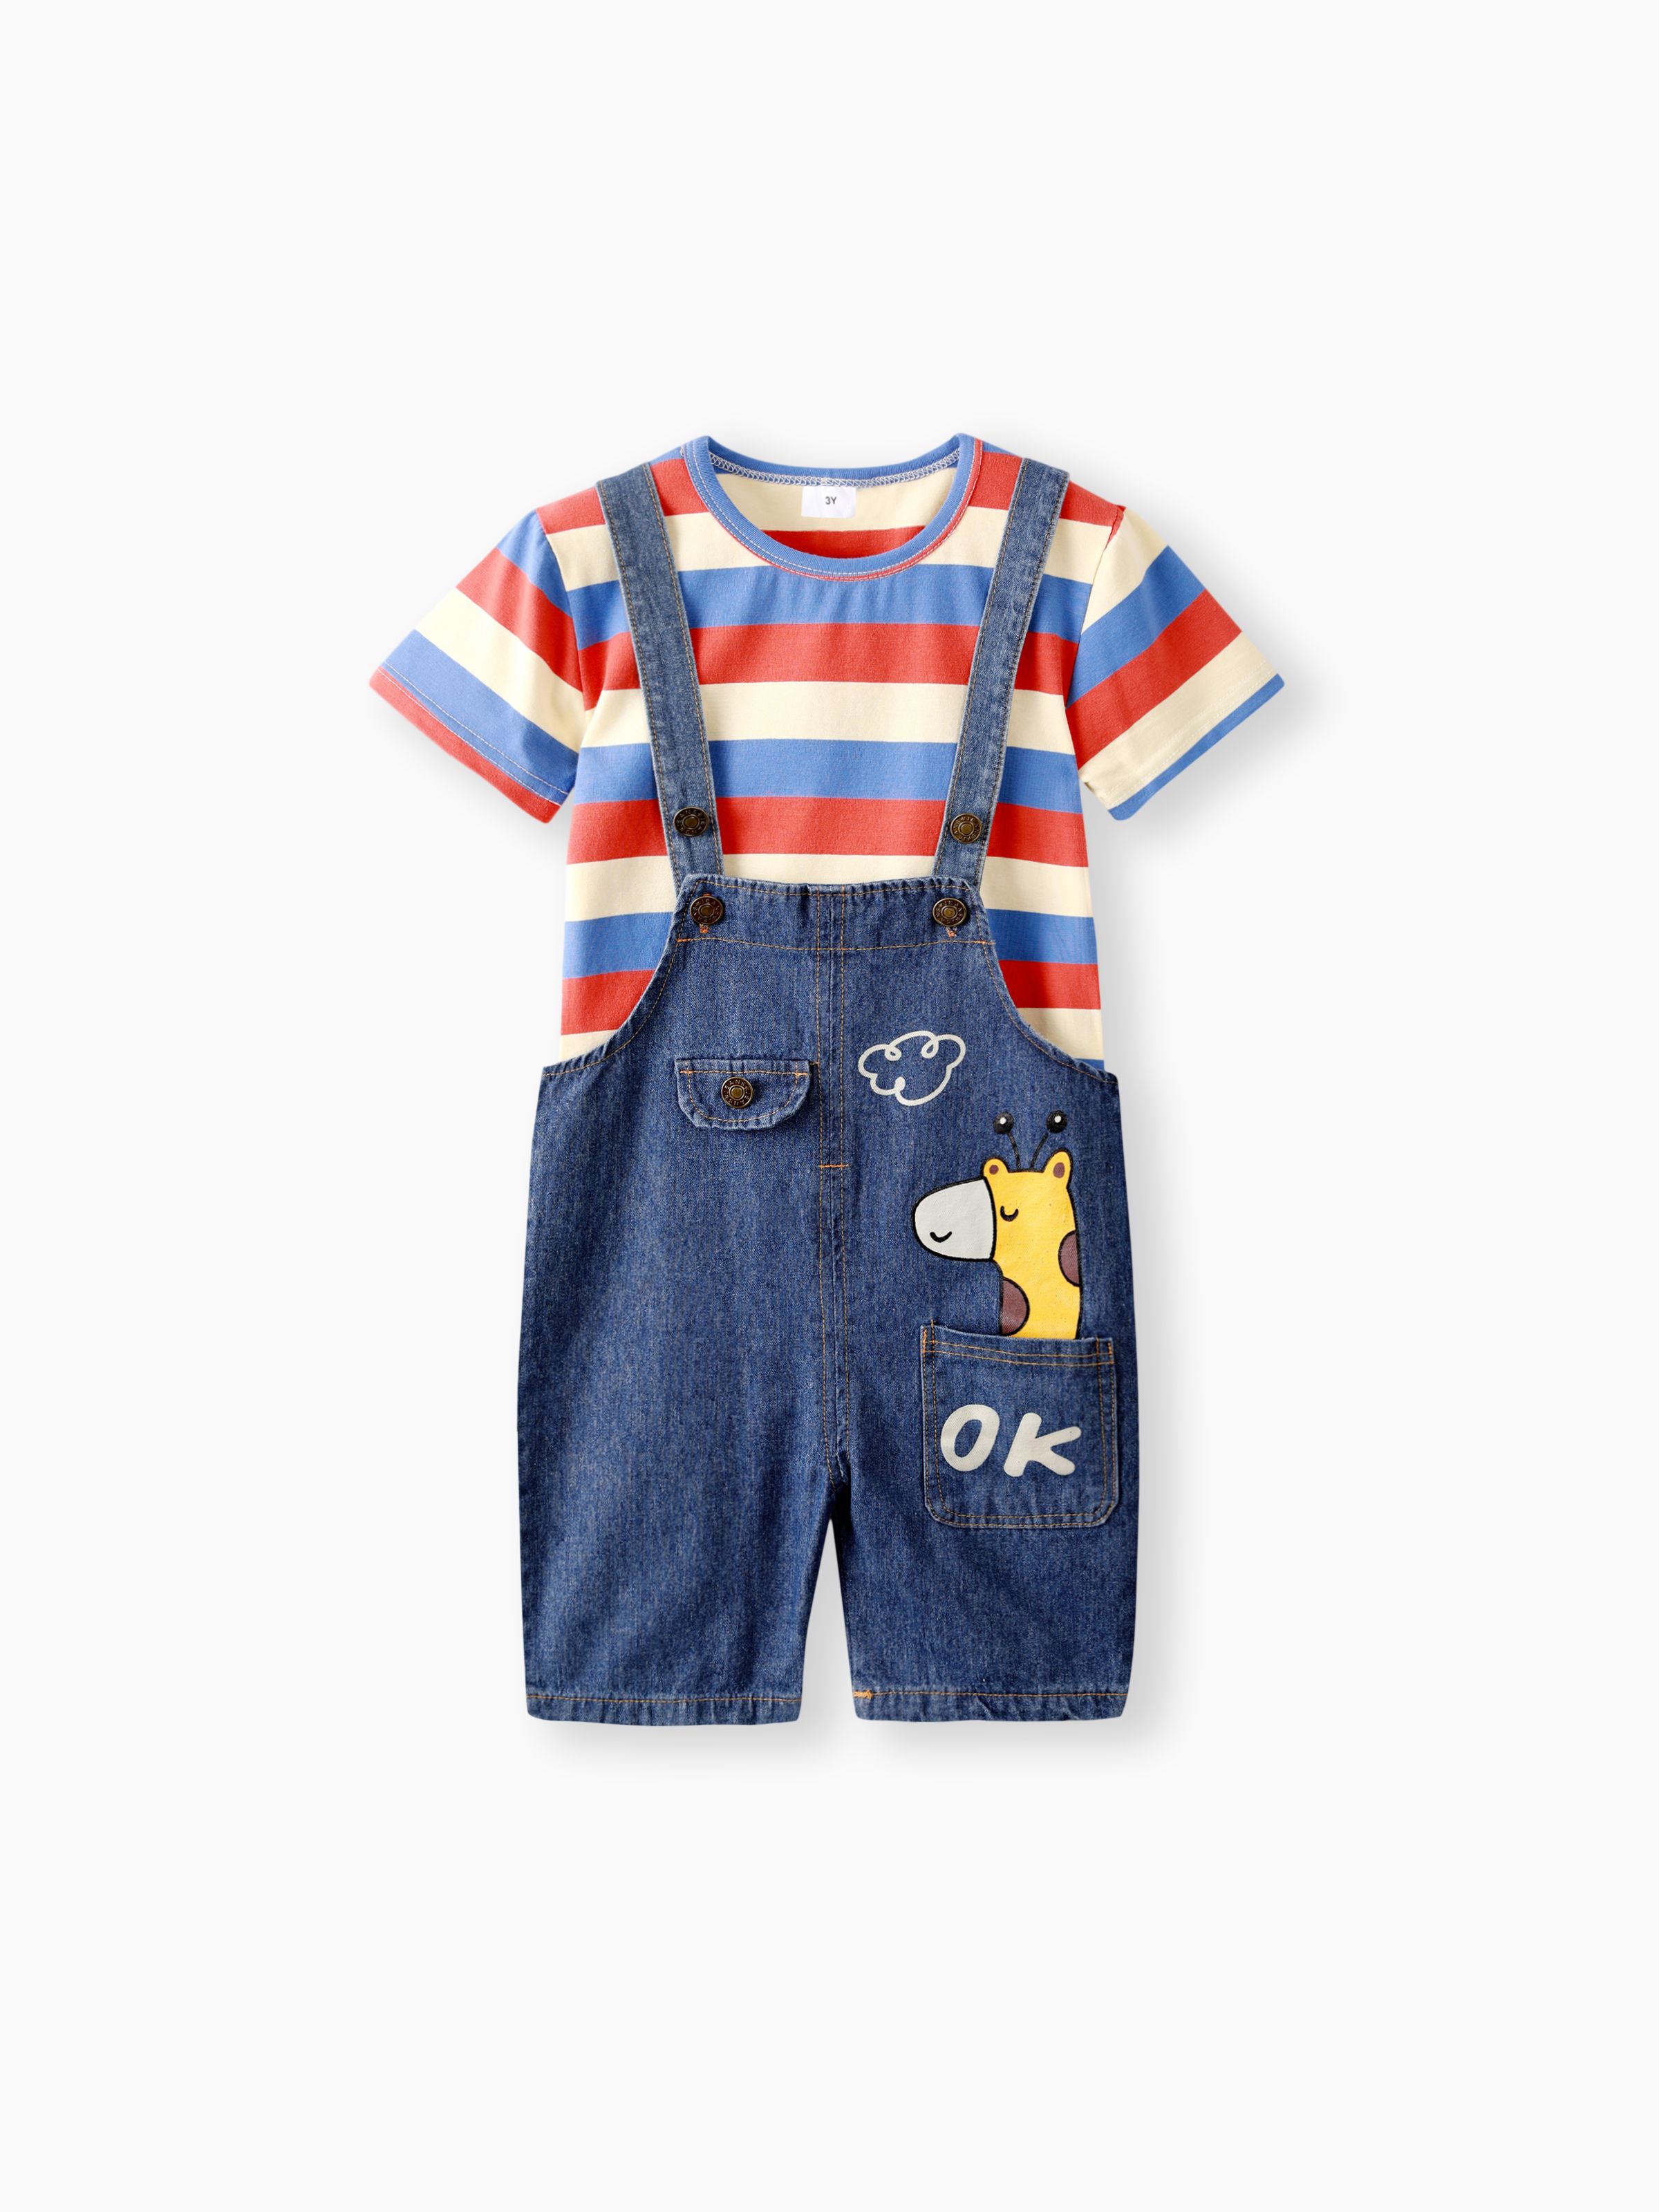 

2pcs Baby Boy/Girl 95% Cotton Short-sleeve Striped Tee and Cartoon Giraffe Print Denim Overalls Shorts Set